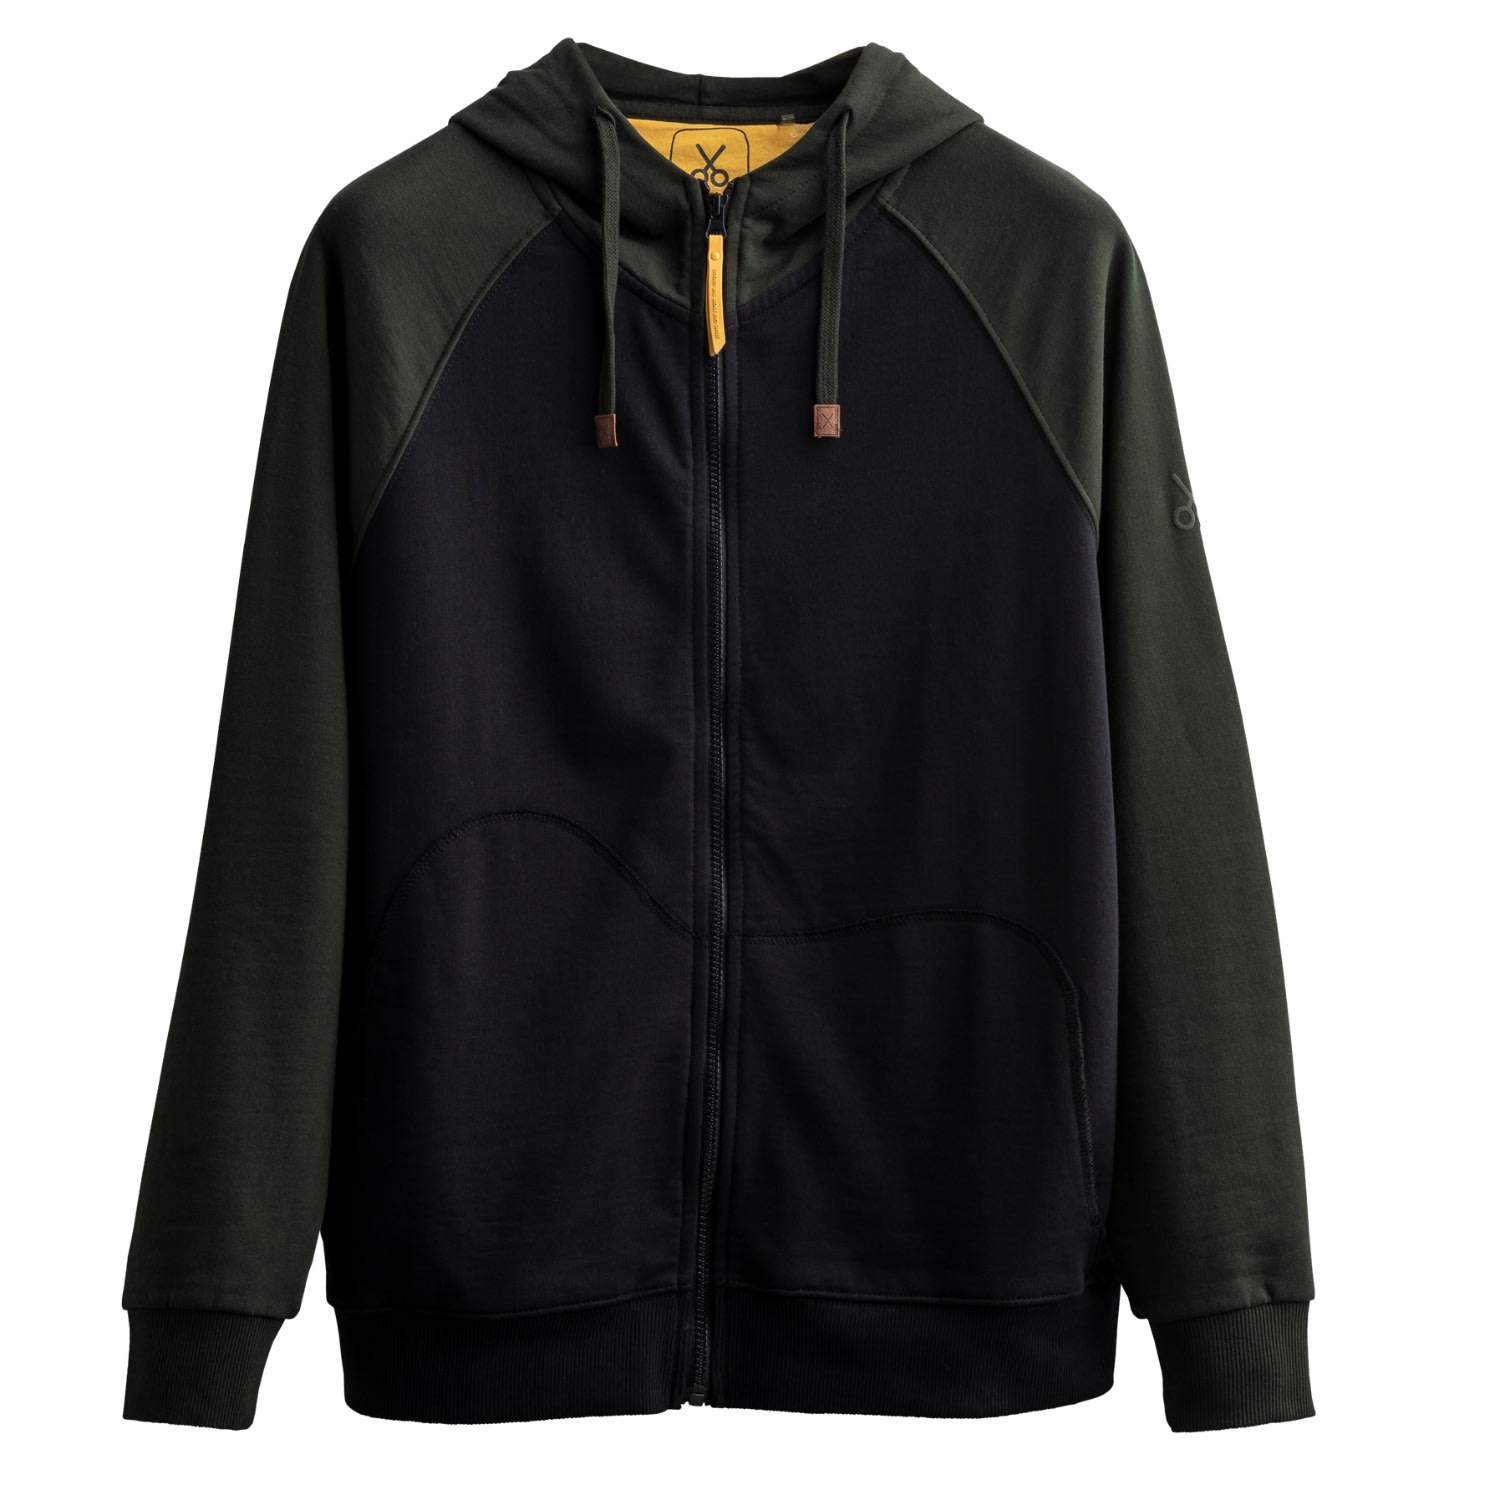 Men's Black Unisex Design Zipper Hoodie Sweatshirt - Kleuzip - Tar Extra Small KAFT